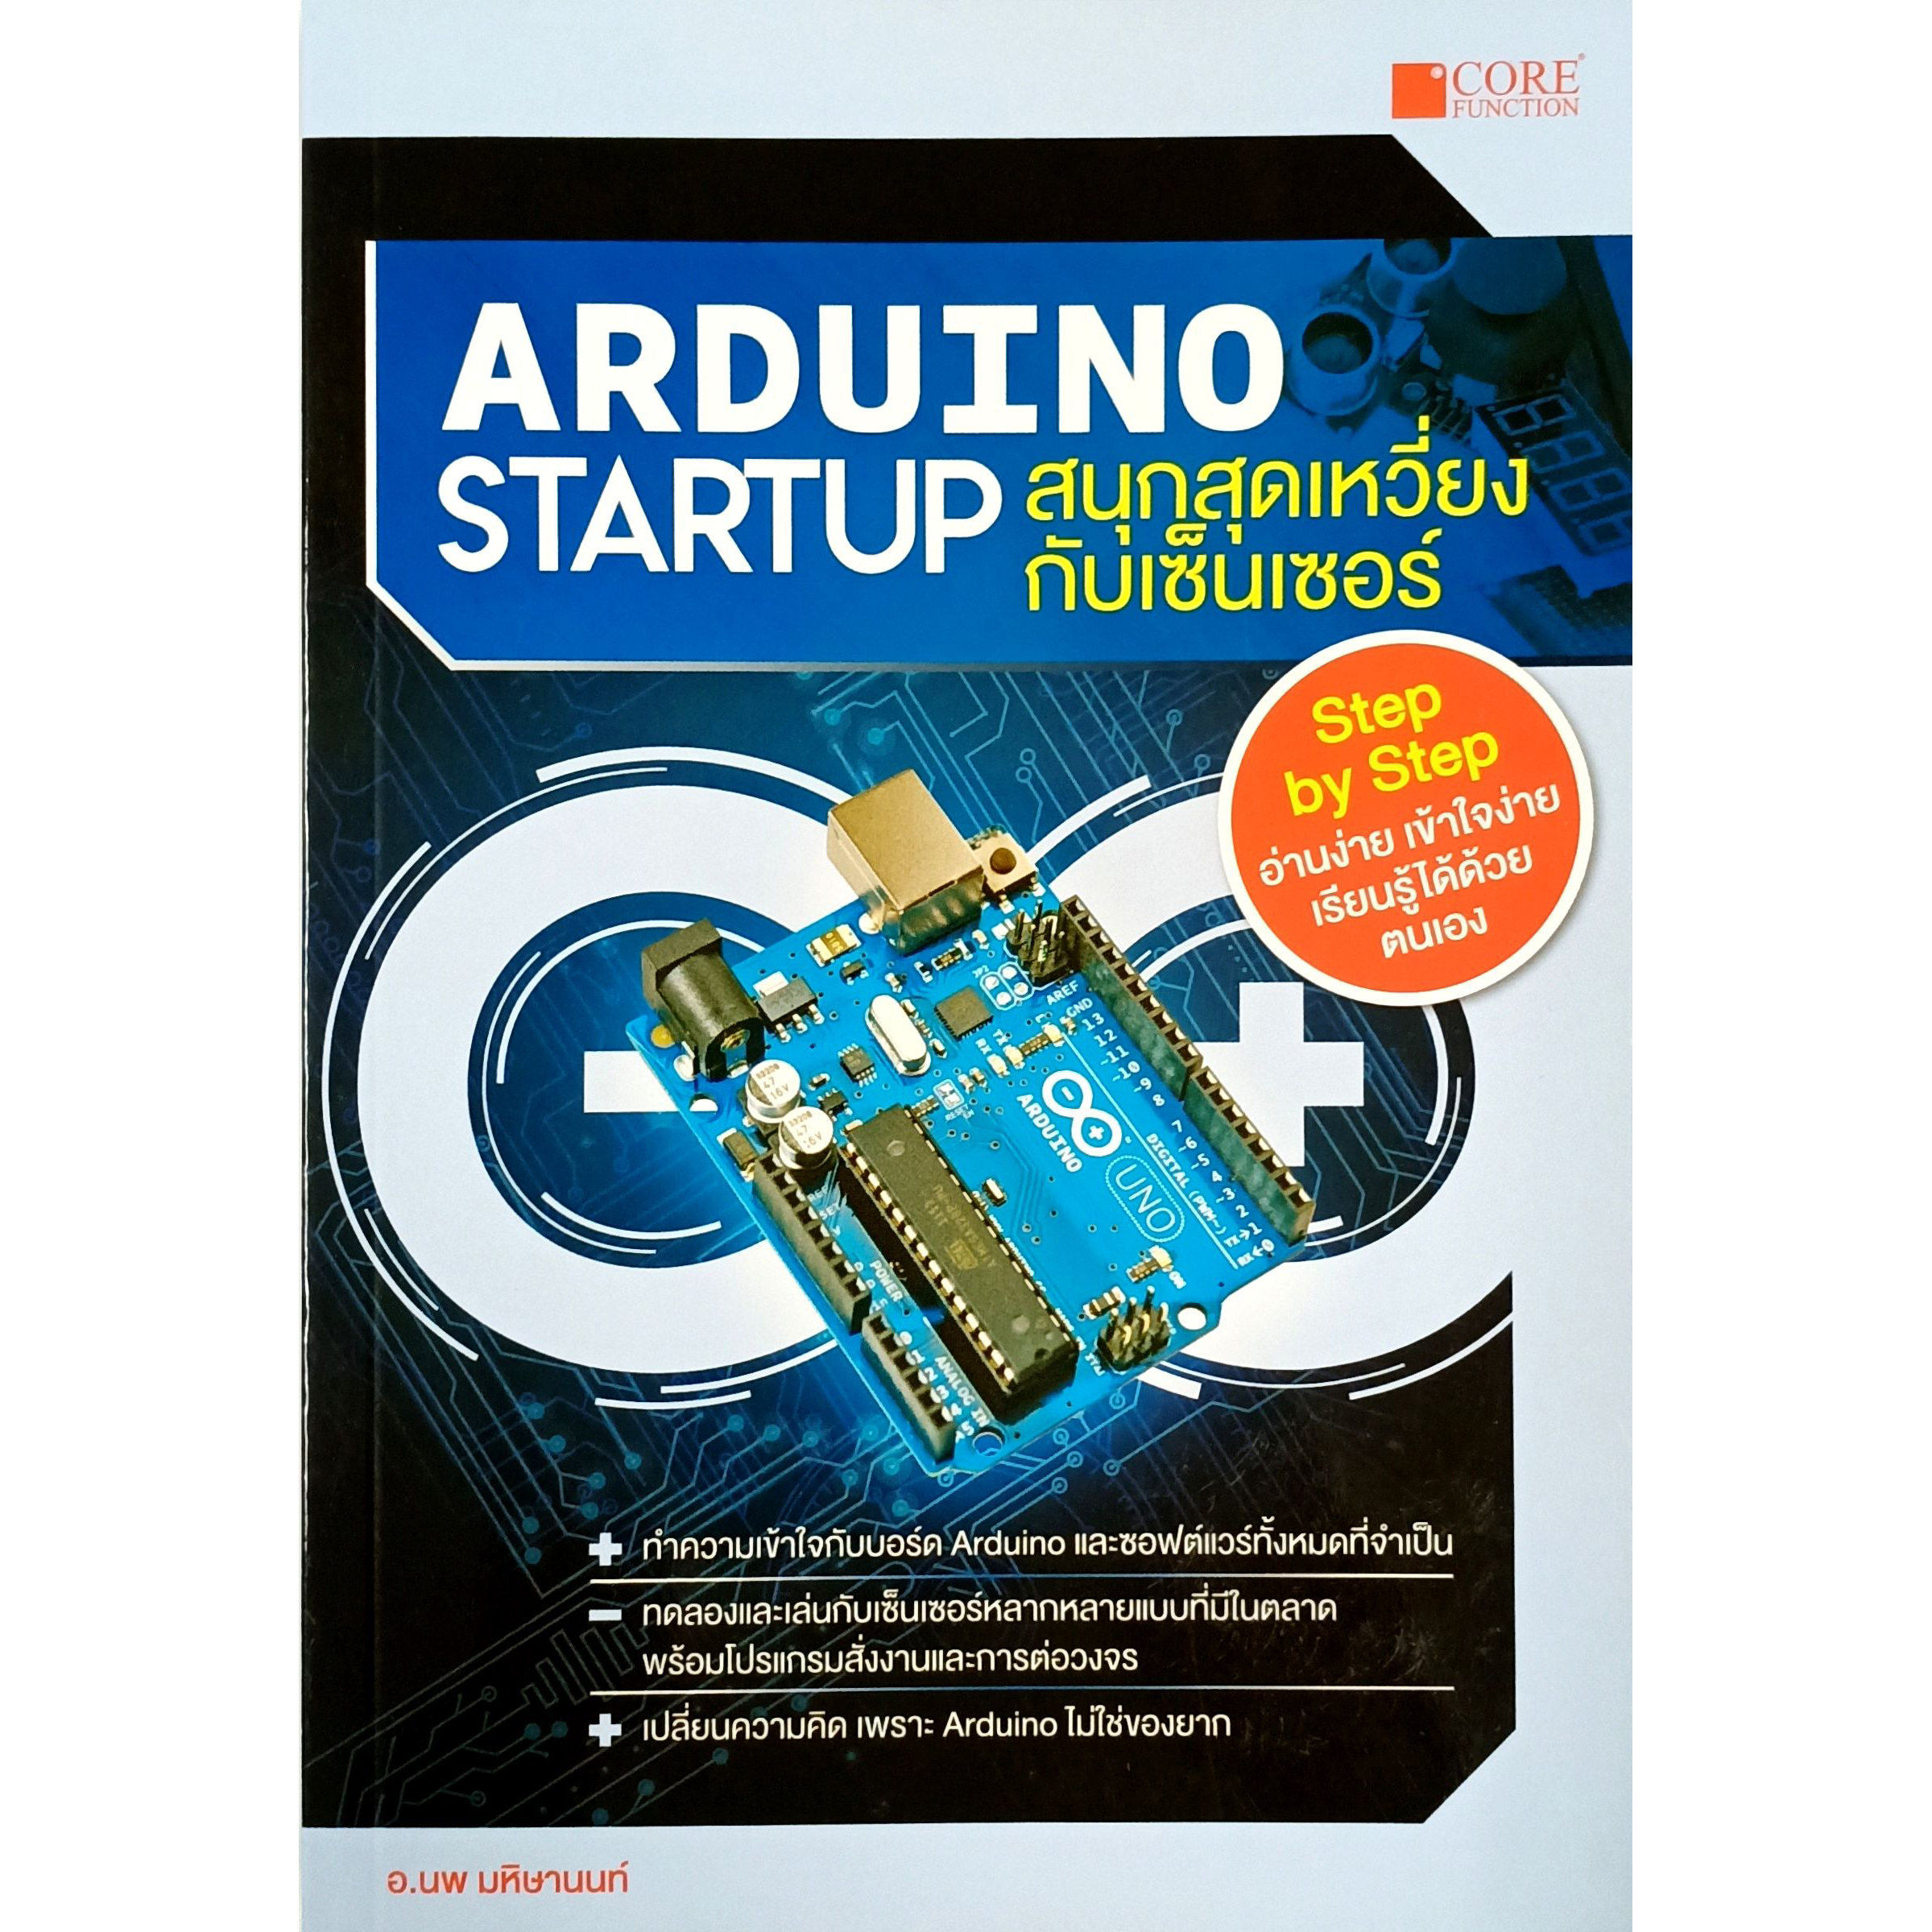 Arduino Startup สนุกสุดเหวี่ยงกับเซ็นเซอร์(สภาพ B หนังสือมือ 1)